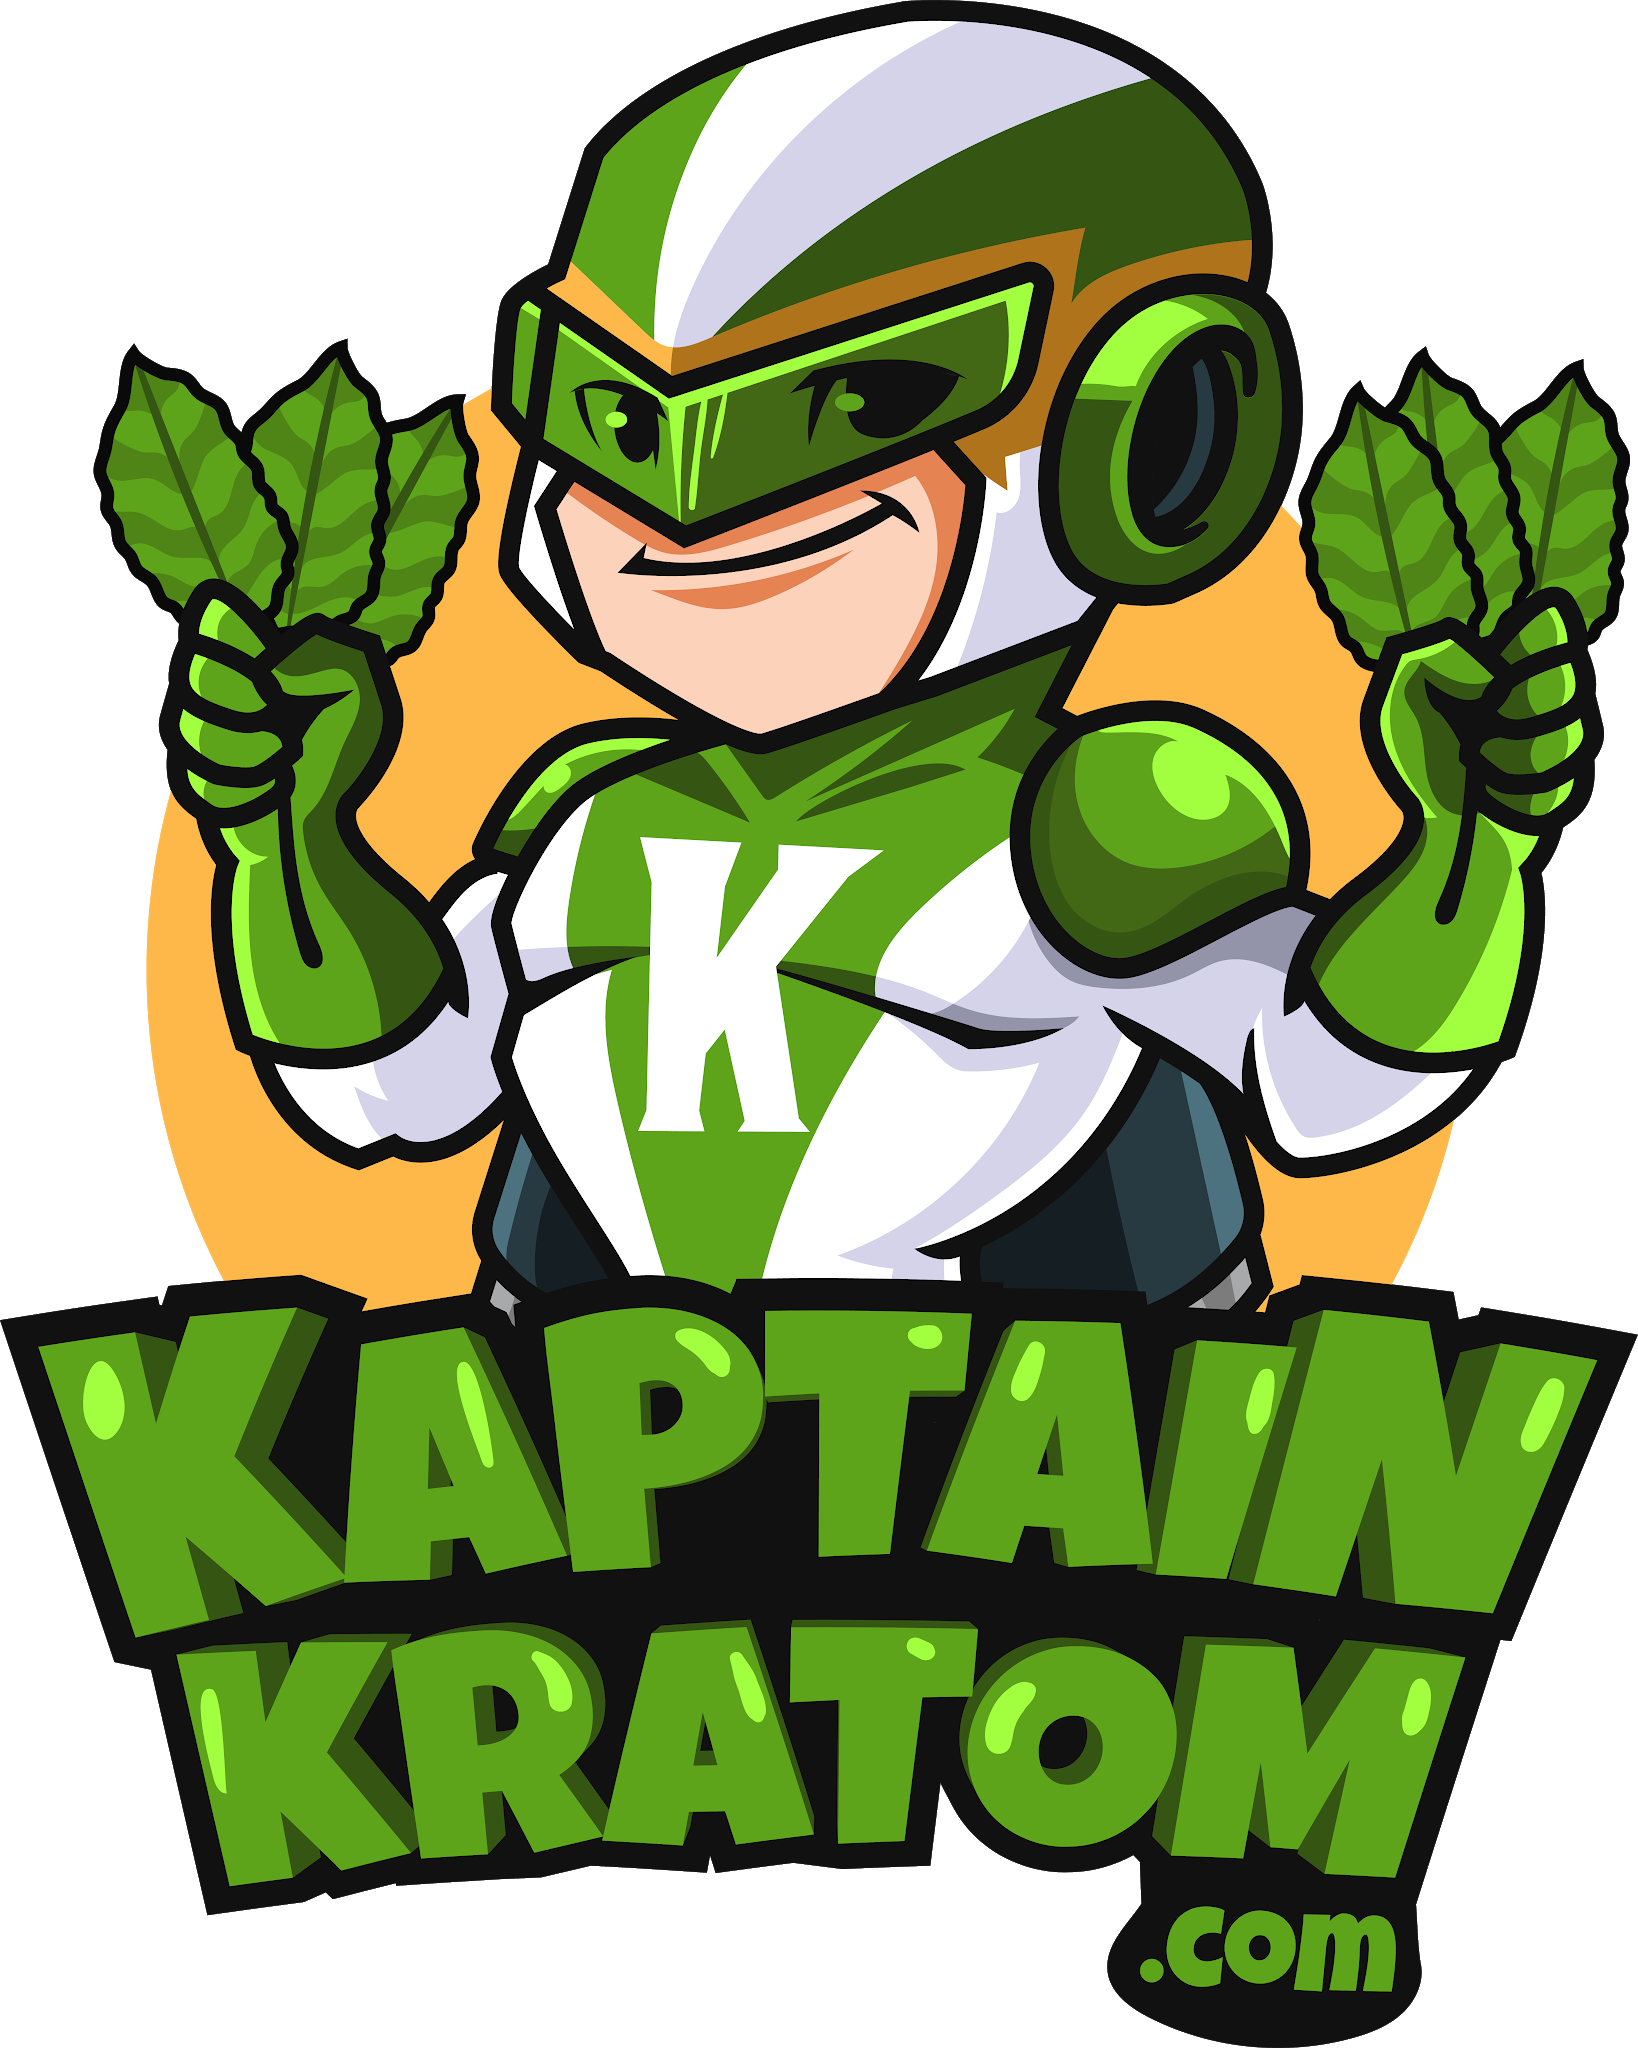 Kaptain-kratom logo